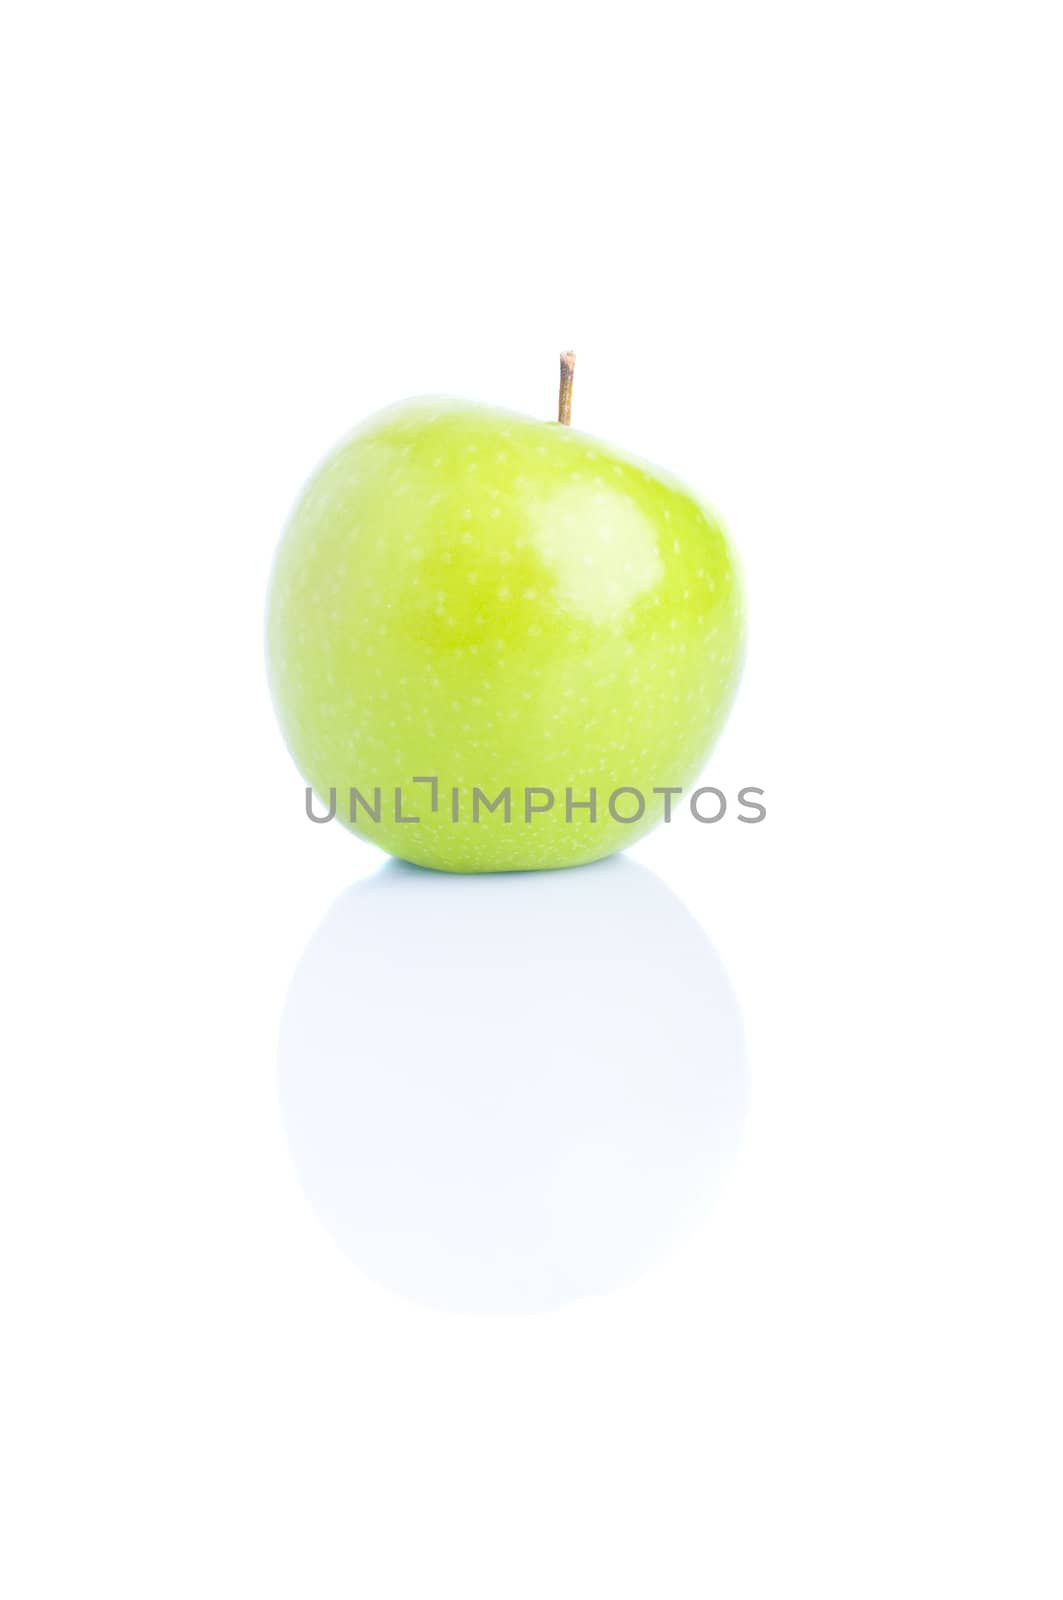 apple by yuliang11